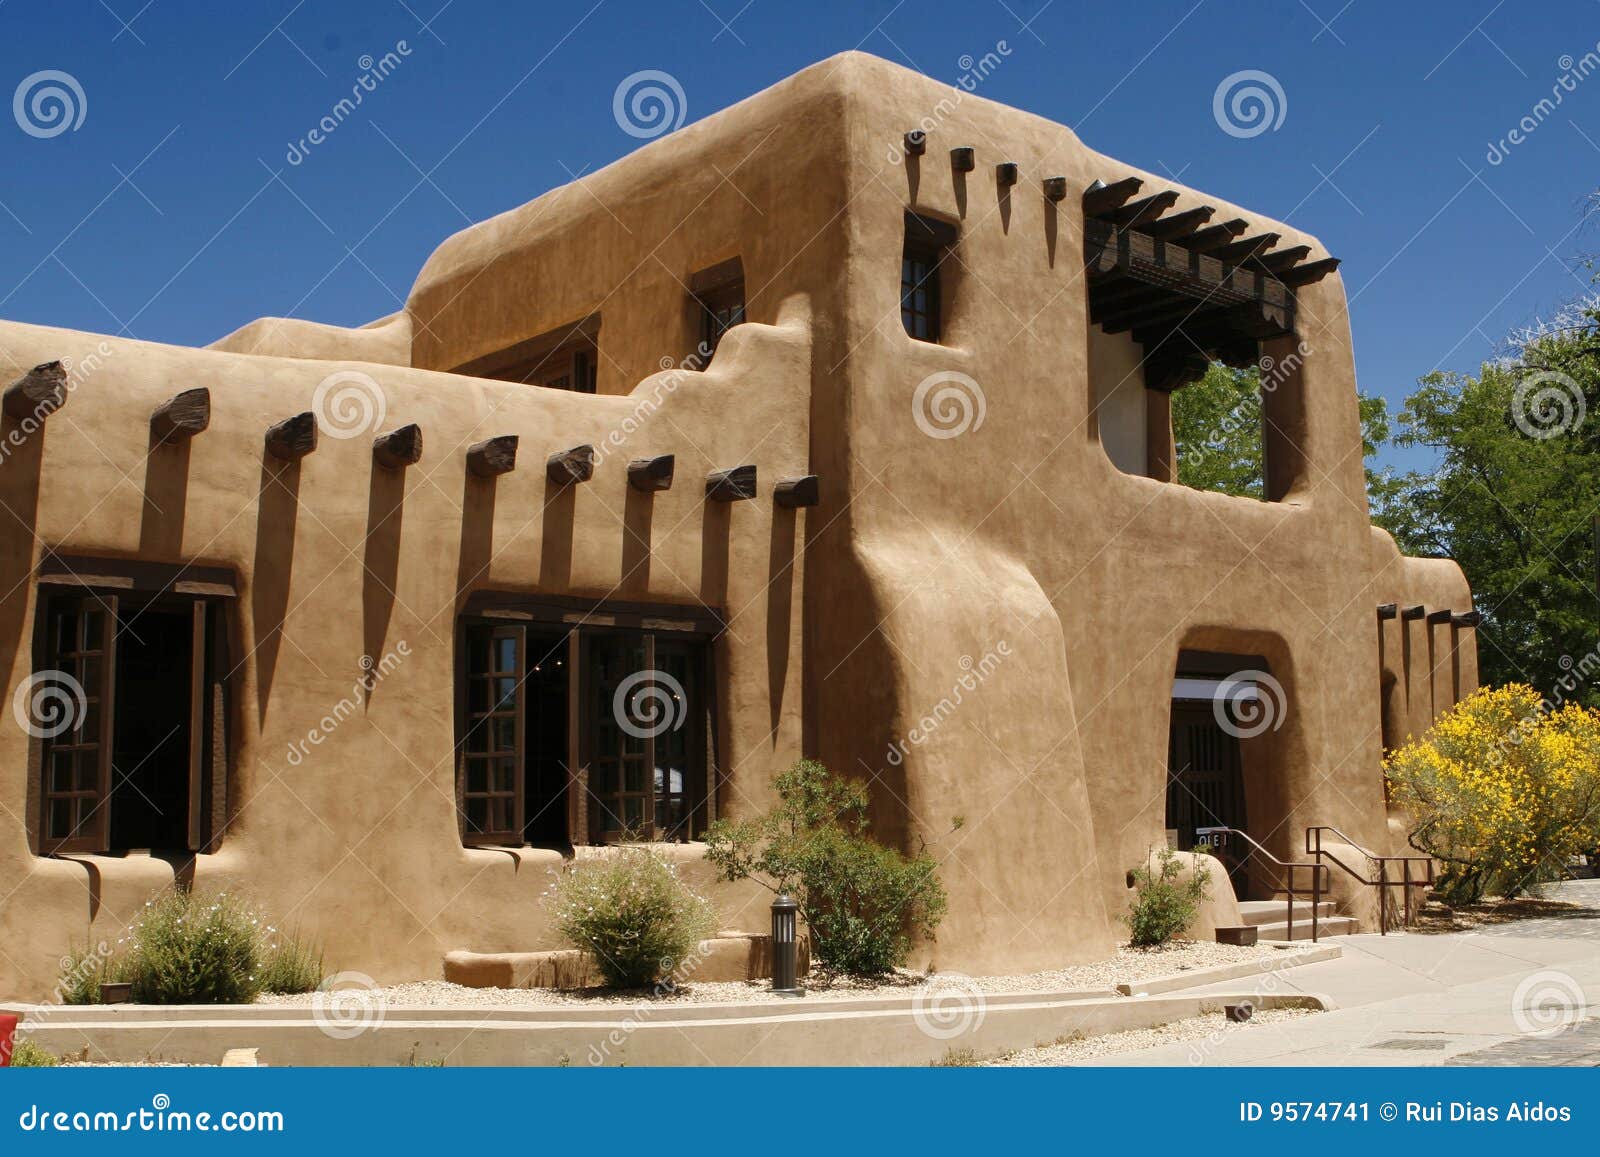 Pueblo Style Barred Dormers Stock Image - Image: 9574741